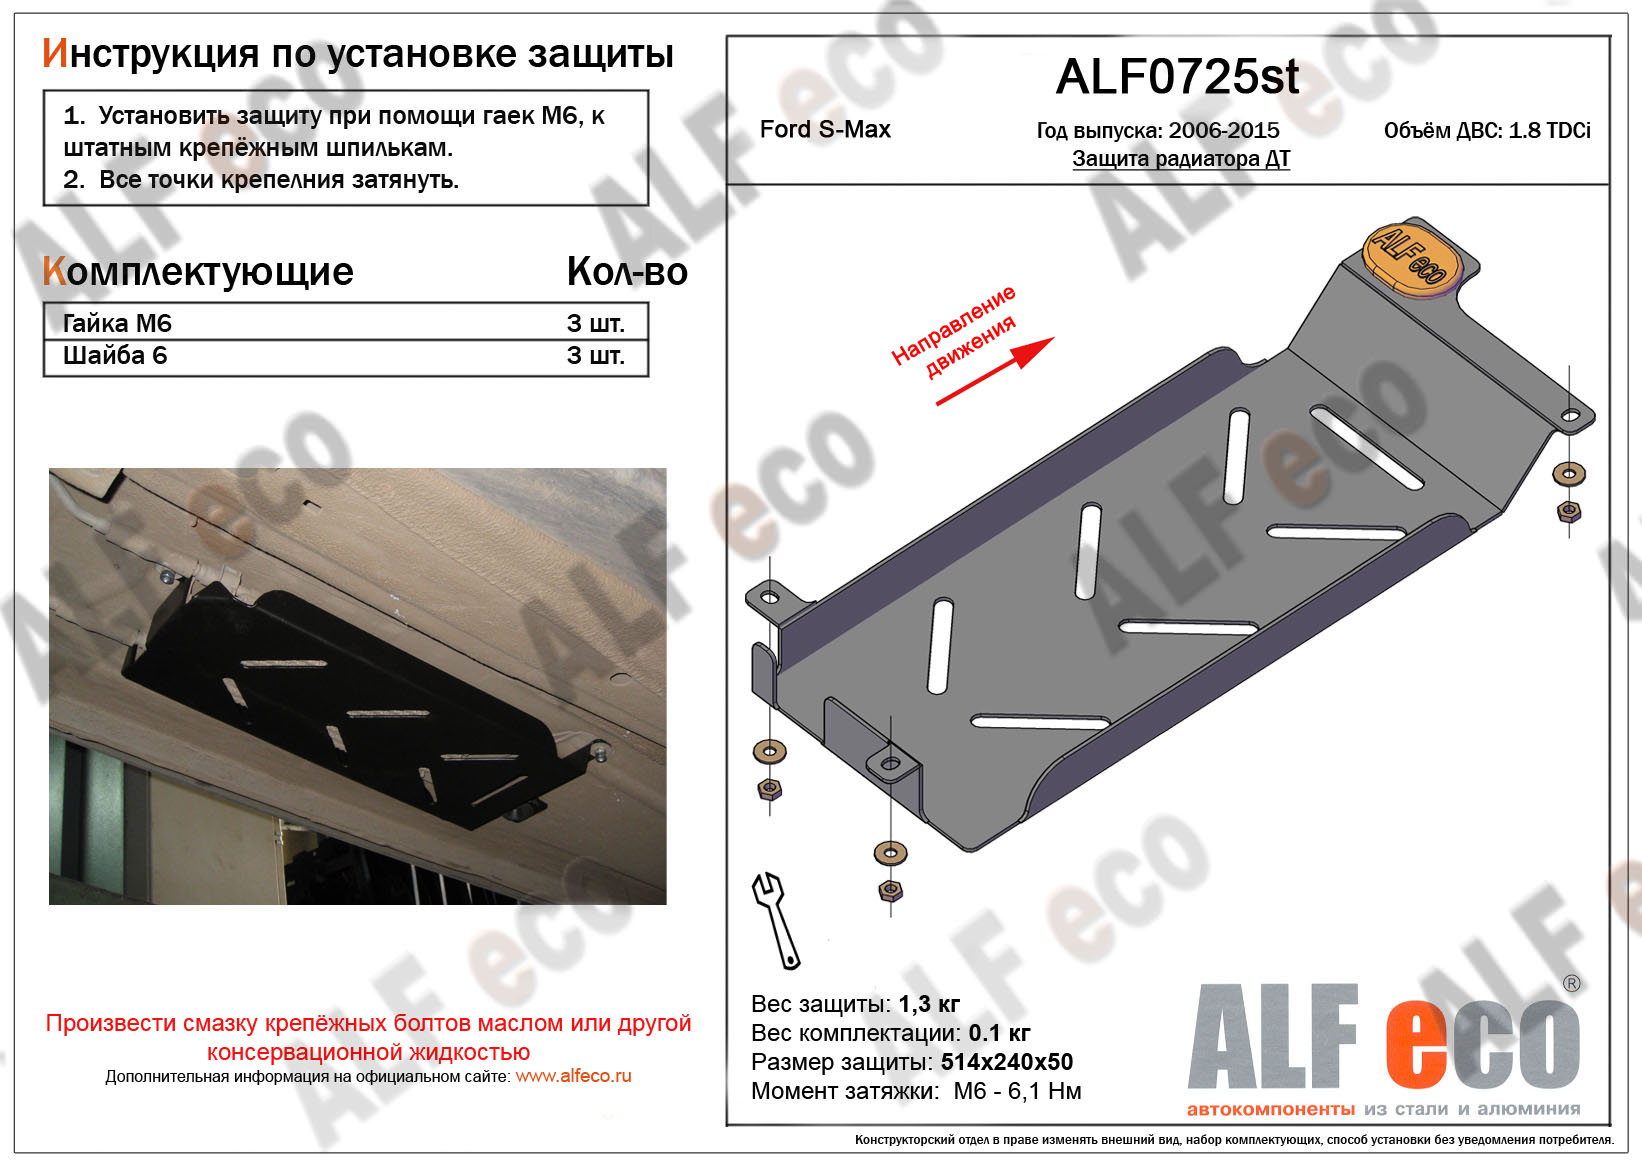 Защита  радиатора ДТ для Ford S-Max 2006-2015  V-1.8 TDCi , ALFeco, алюминий 4мм, арт. ALF0725al